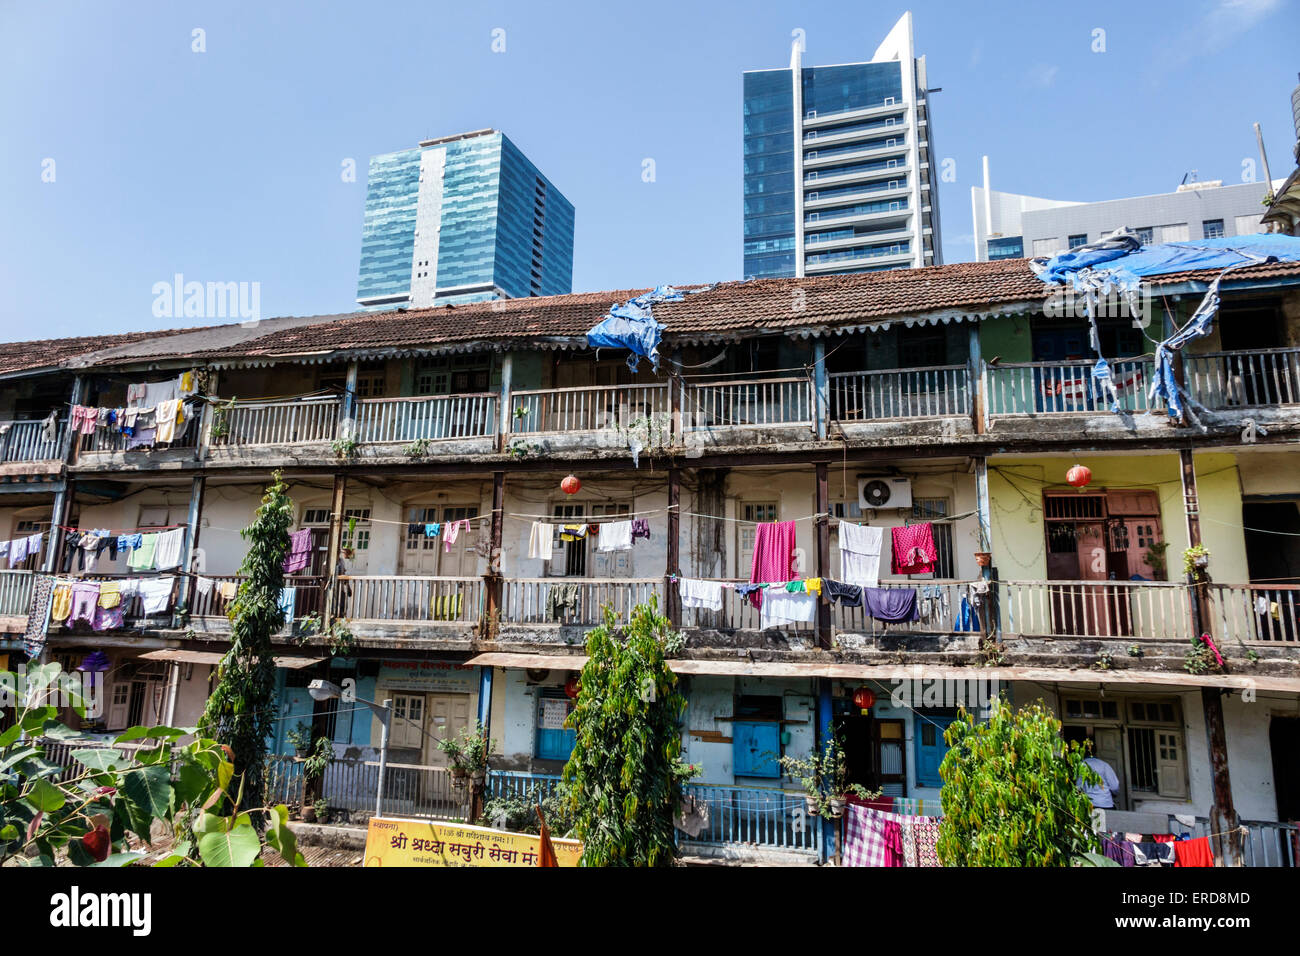 Mumbai India,Lower Parel,old,older,condominium residential apartment apartments building buildings housing,residences,balconies,hanging,laundry,clothe Stock Photo